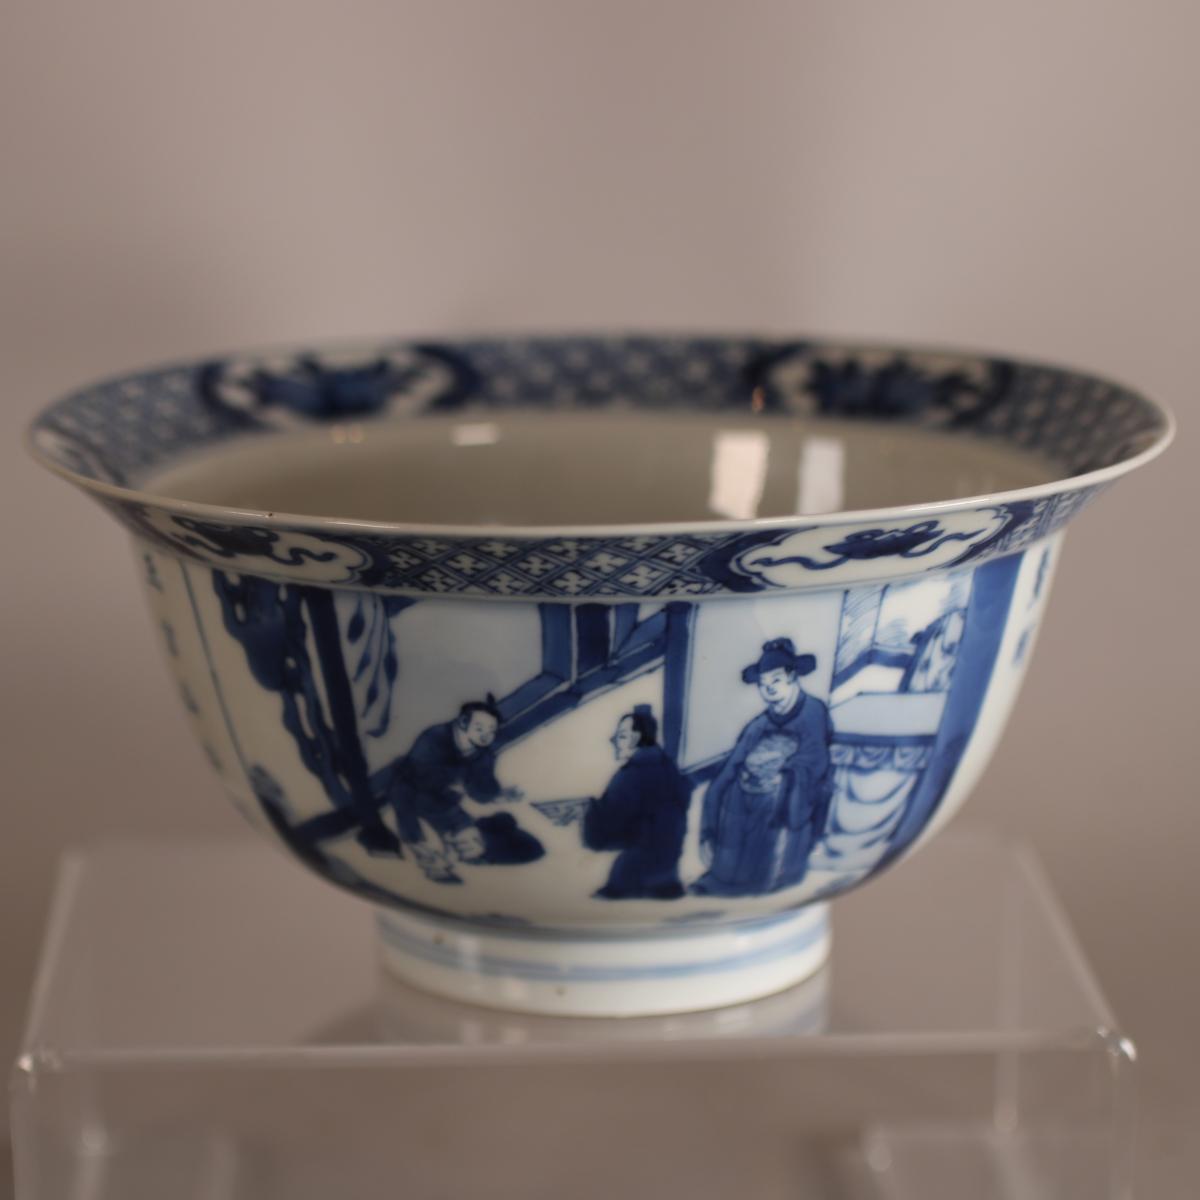 Interior scene on side of blue and white Klapmutz bowl